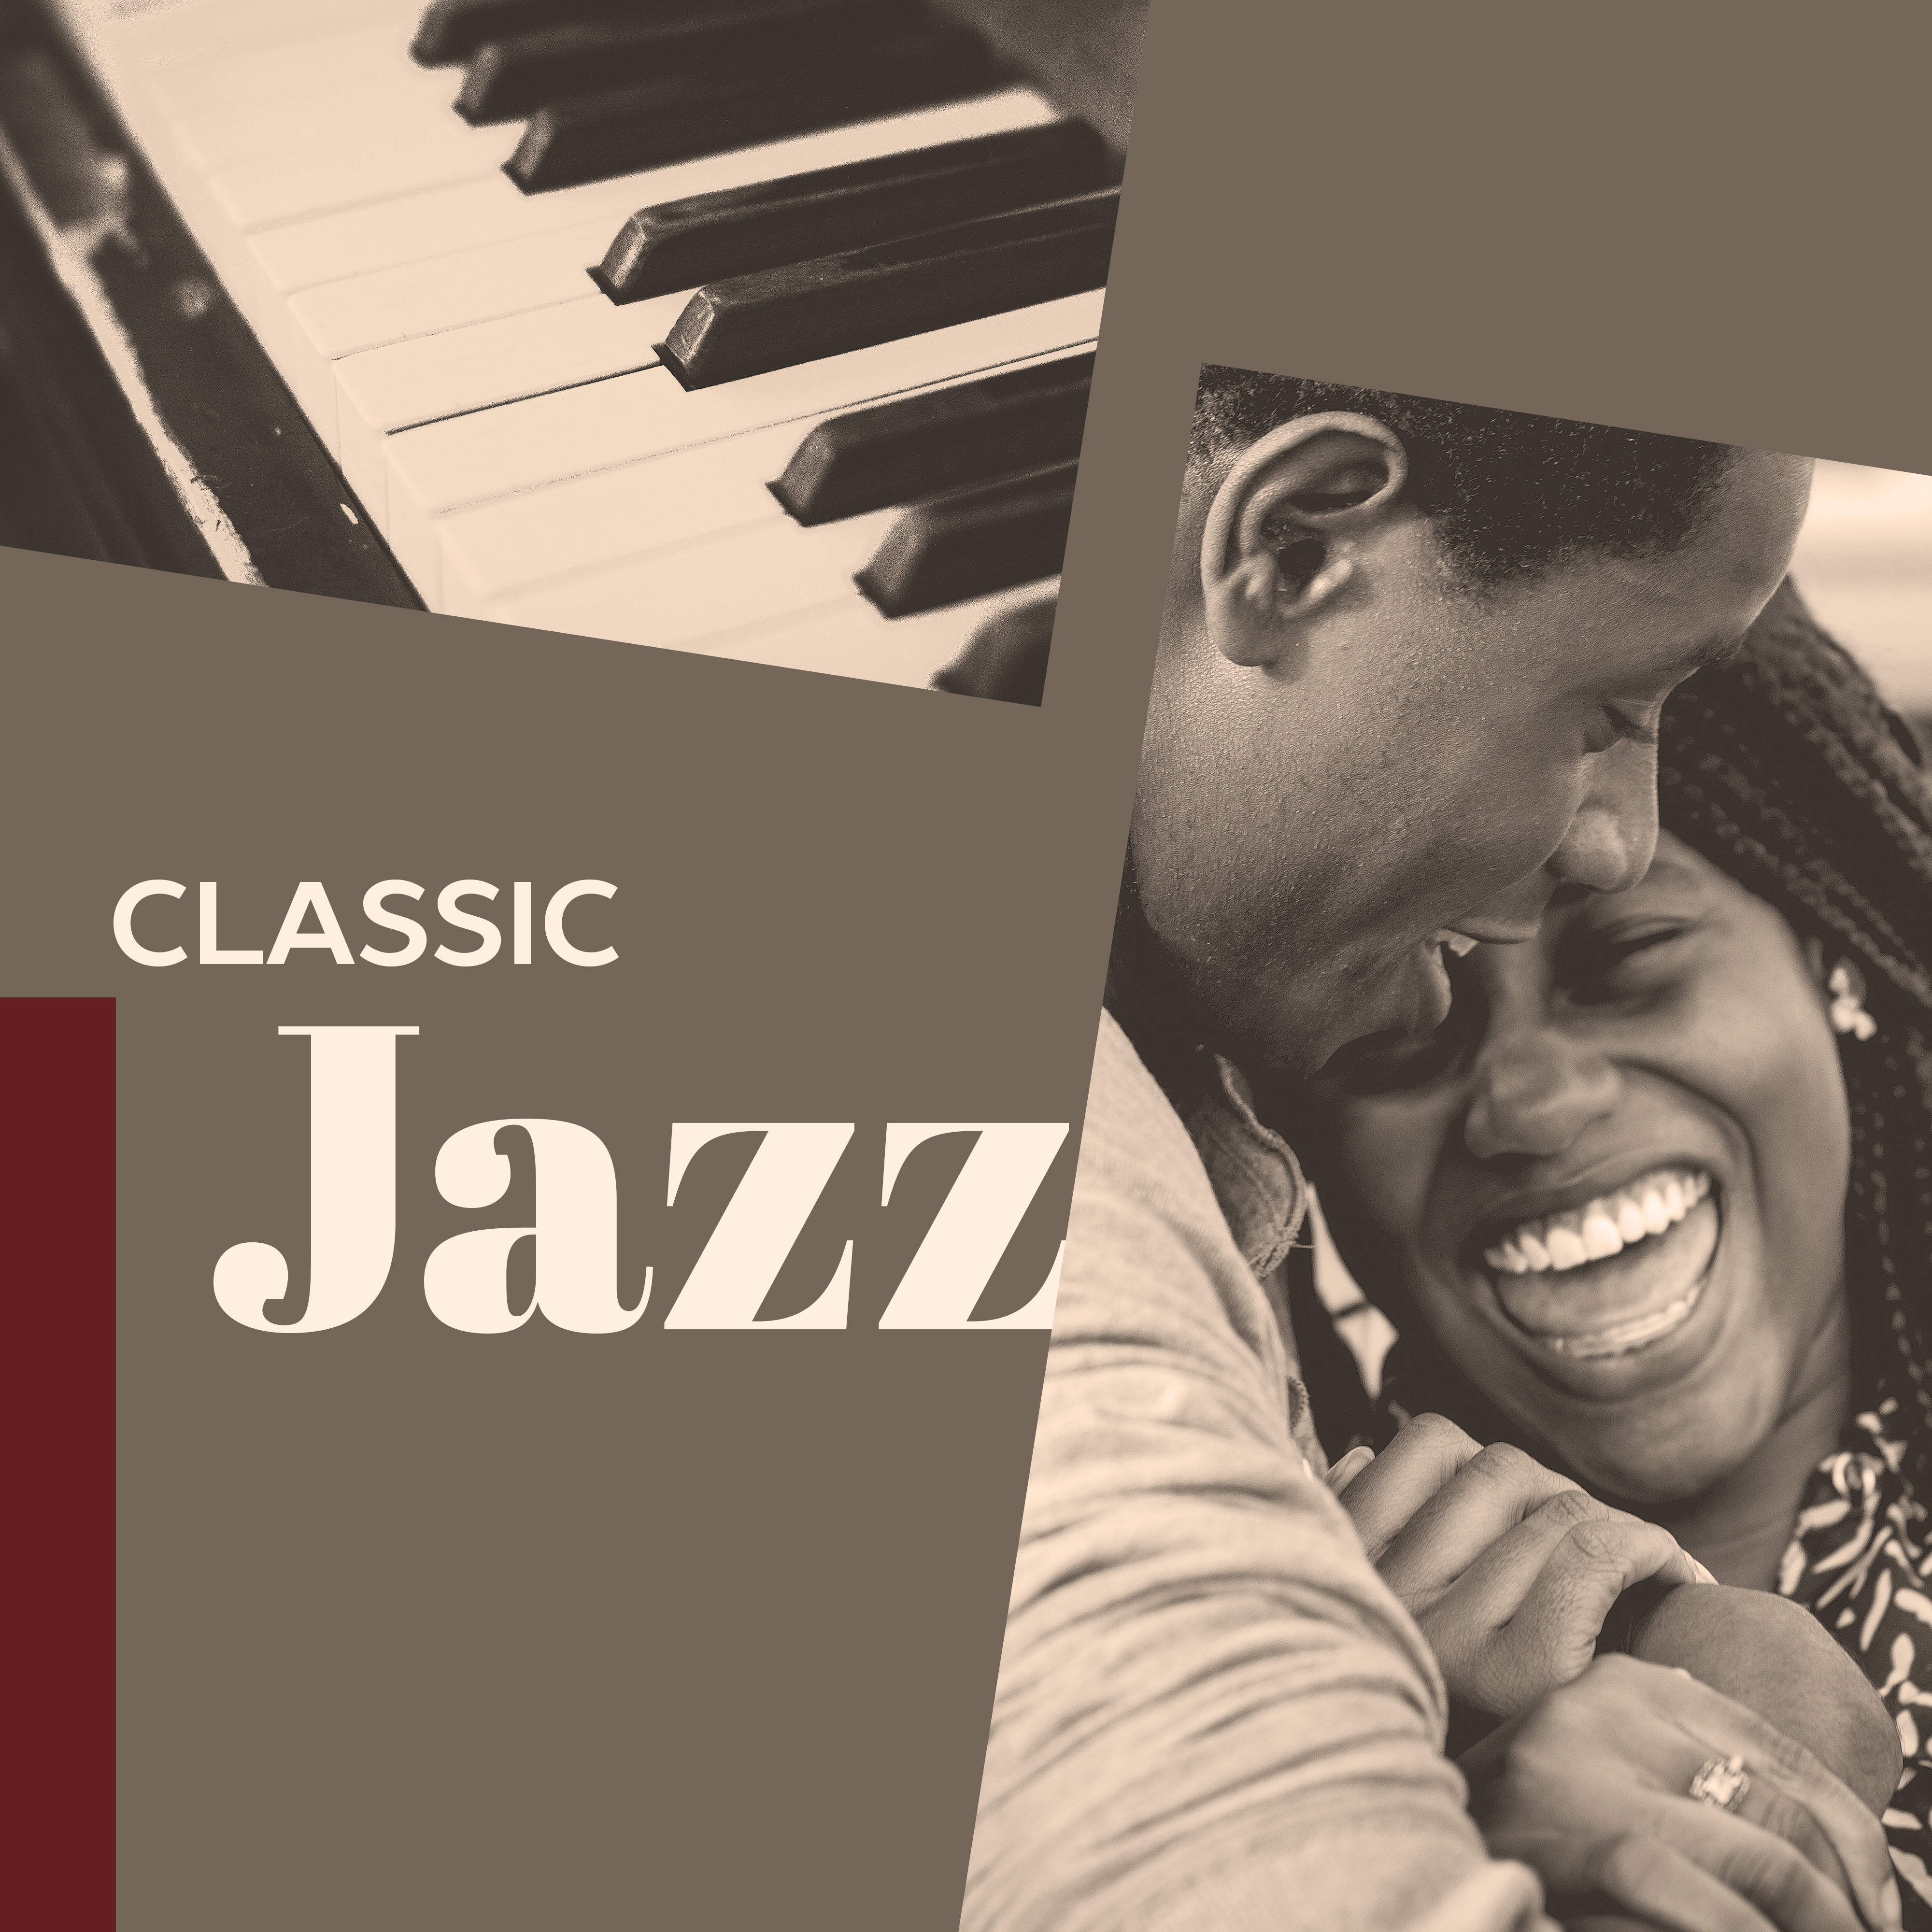 Classic Jazz – Smooth Jazz Cafe, Instrumental Session, Relaxed Jazz